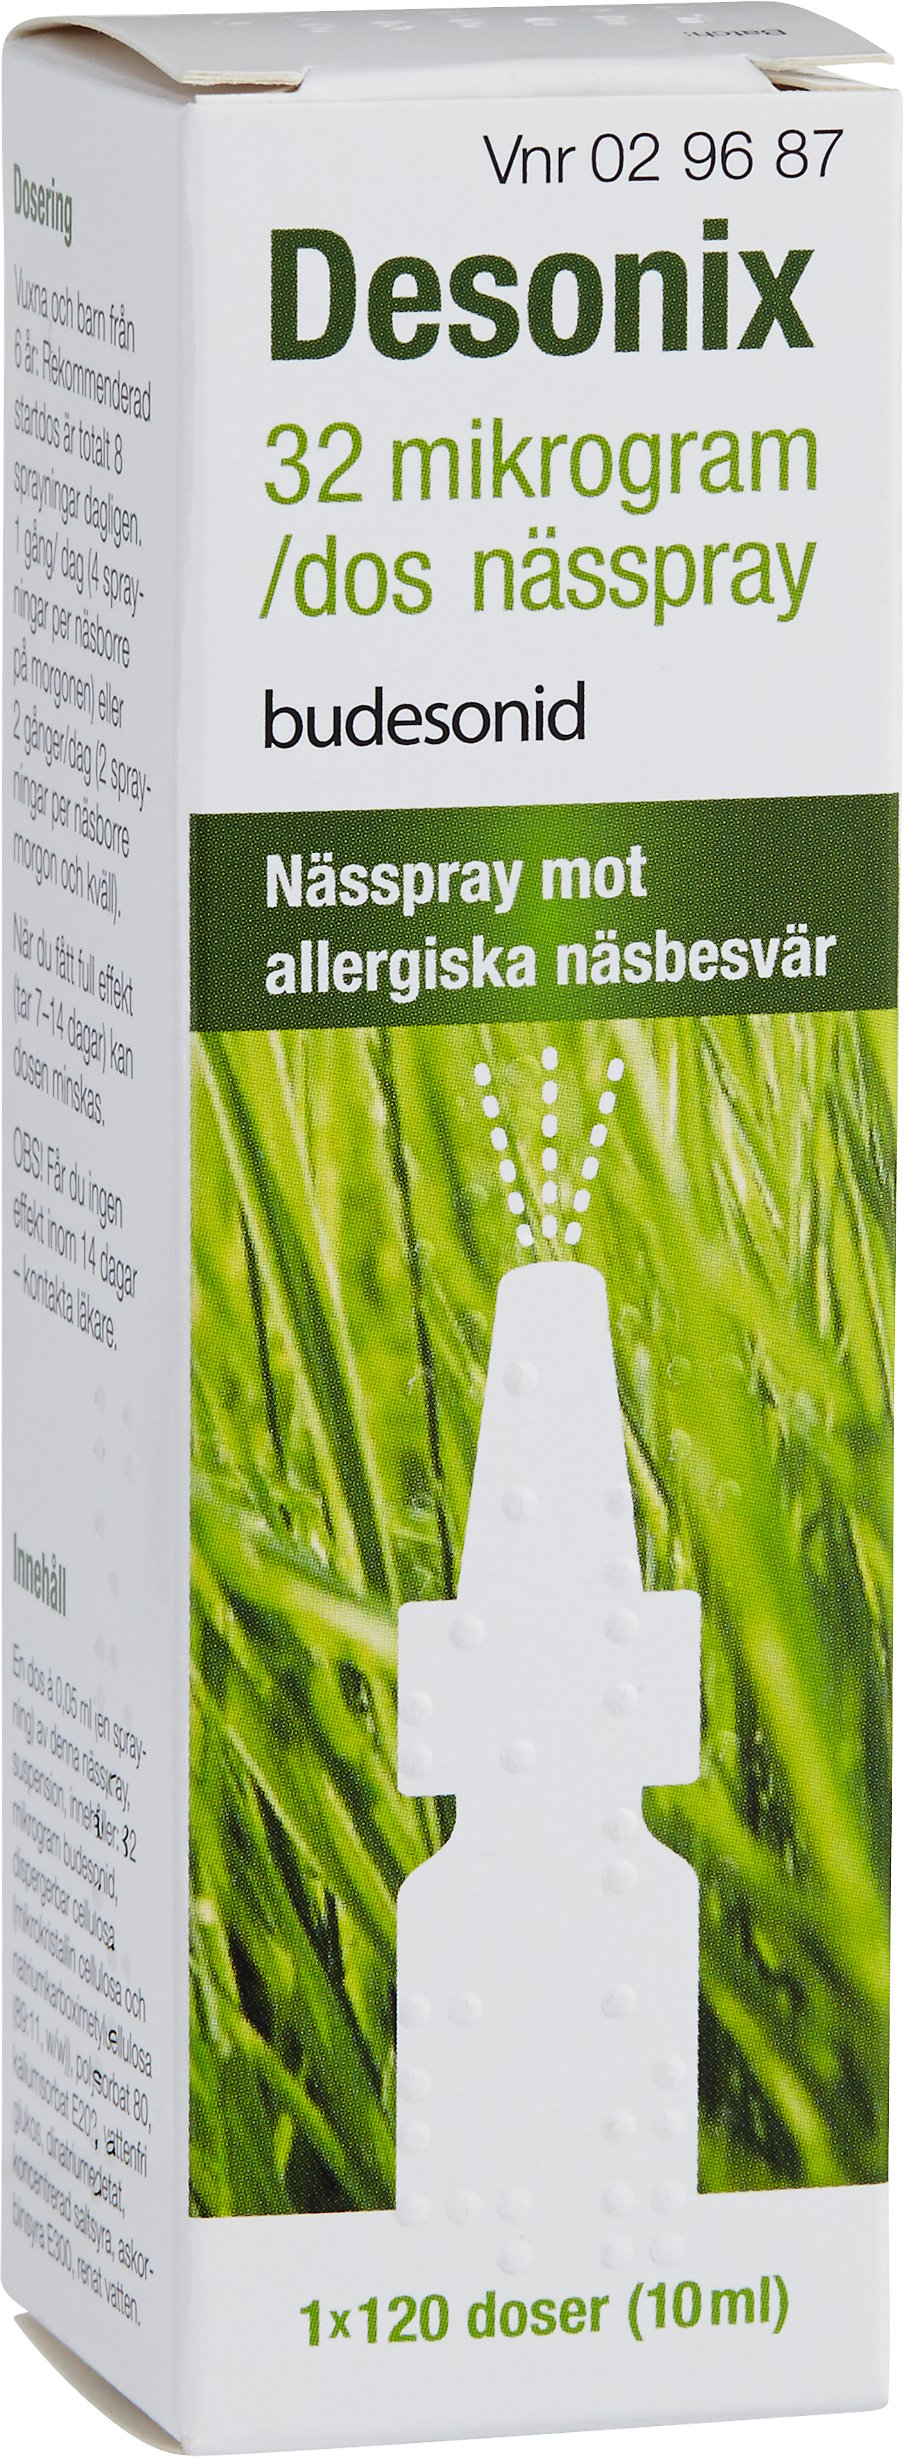 Desonix Nässpray 32 µg/dos, 120 doser